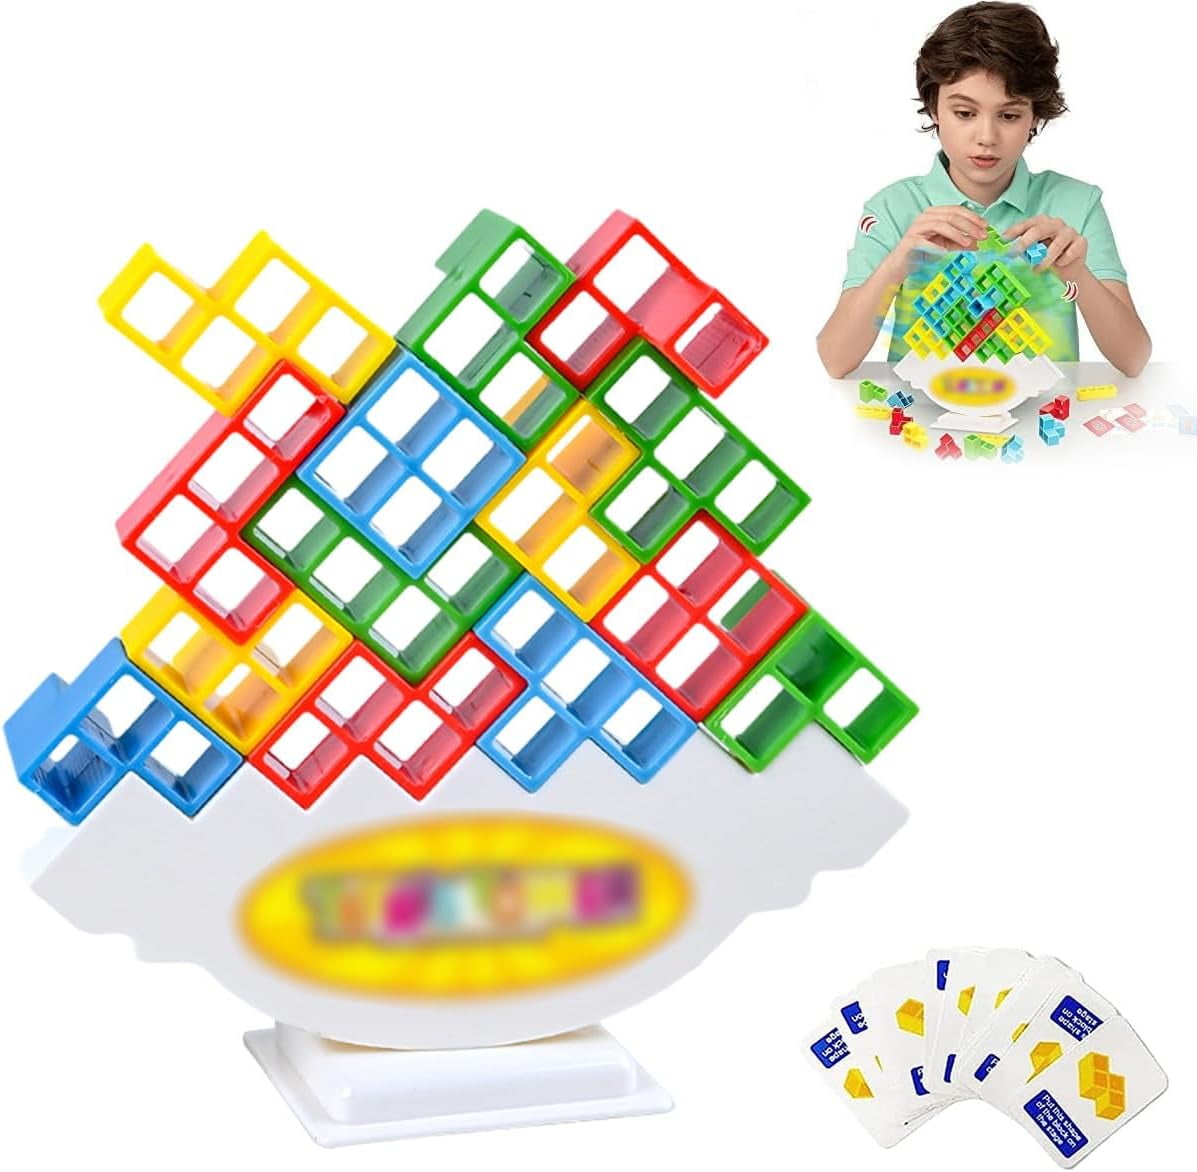 32PCS Tetra Tower Fun Balance Stacking Building Blocks Board Game